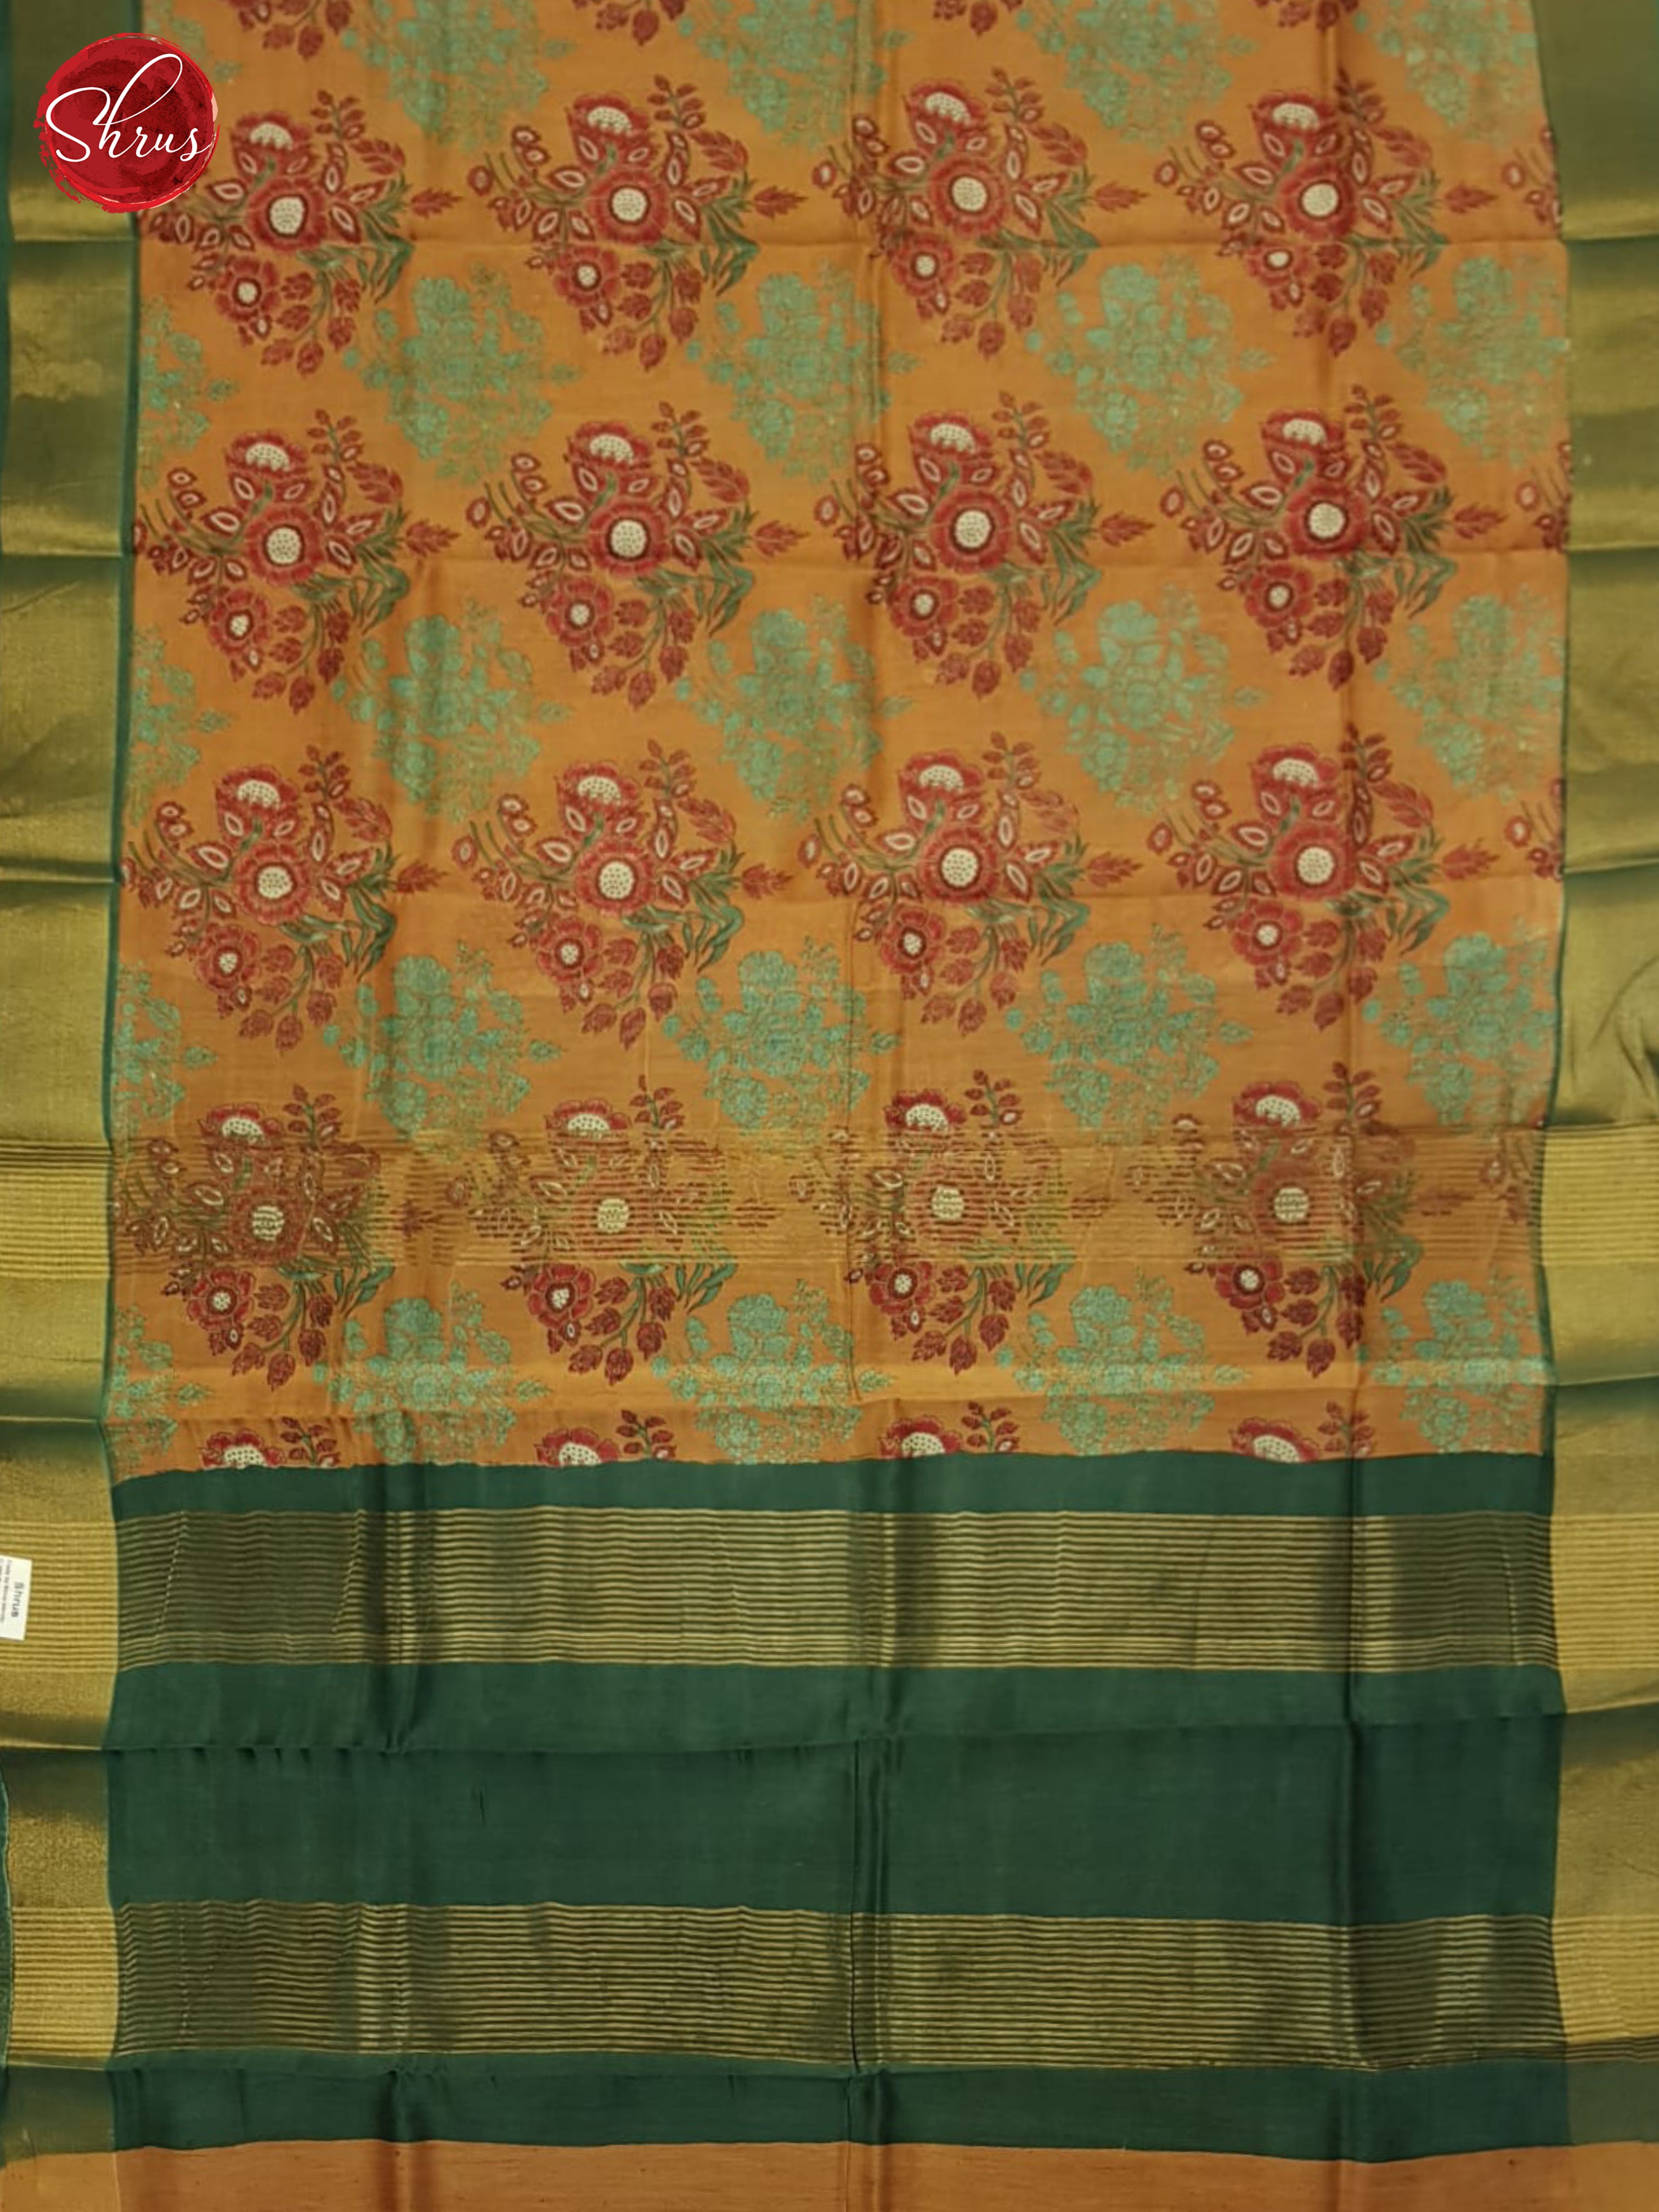 Orange And Green- Moonga Silk Saree - Shop on ShrusEternity.com